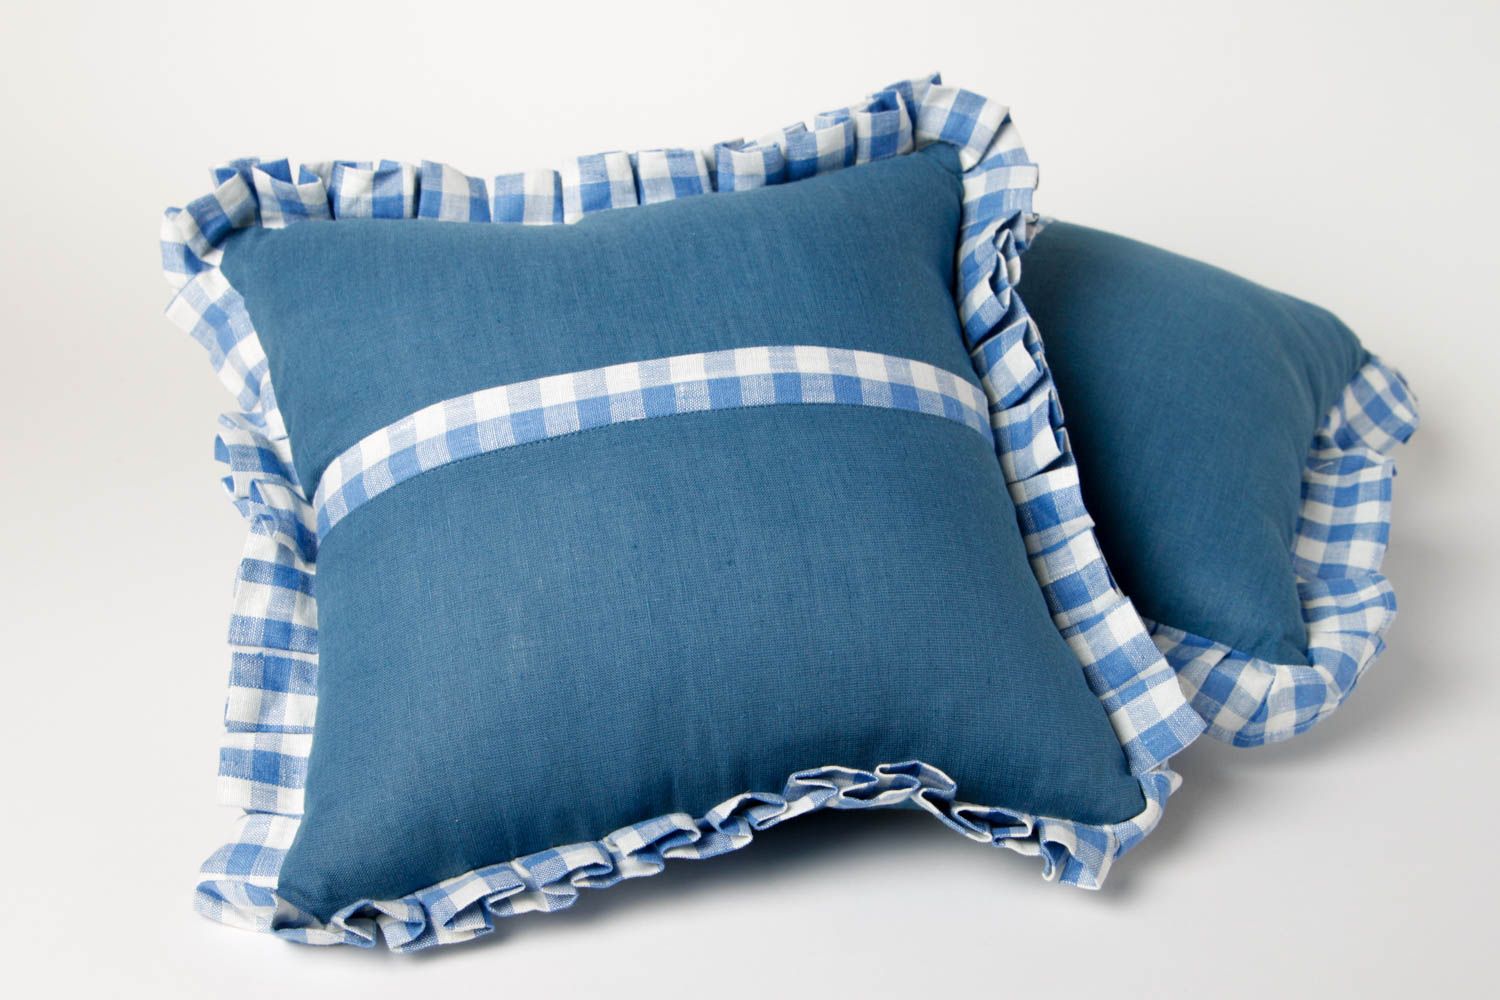 Unusual handmade pillow design decorative cushion interior decorating ideas photo 5